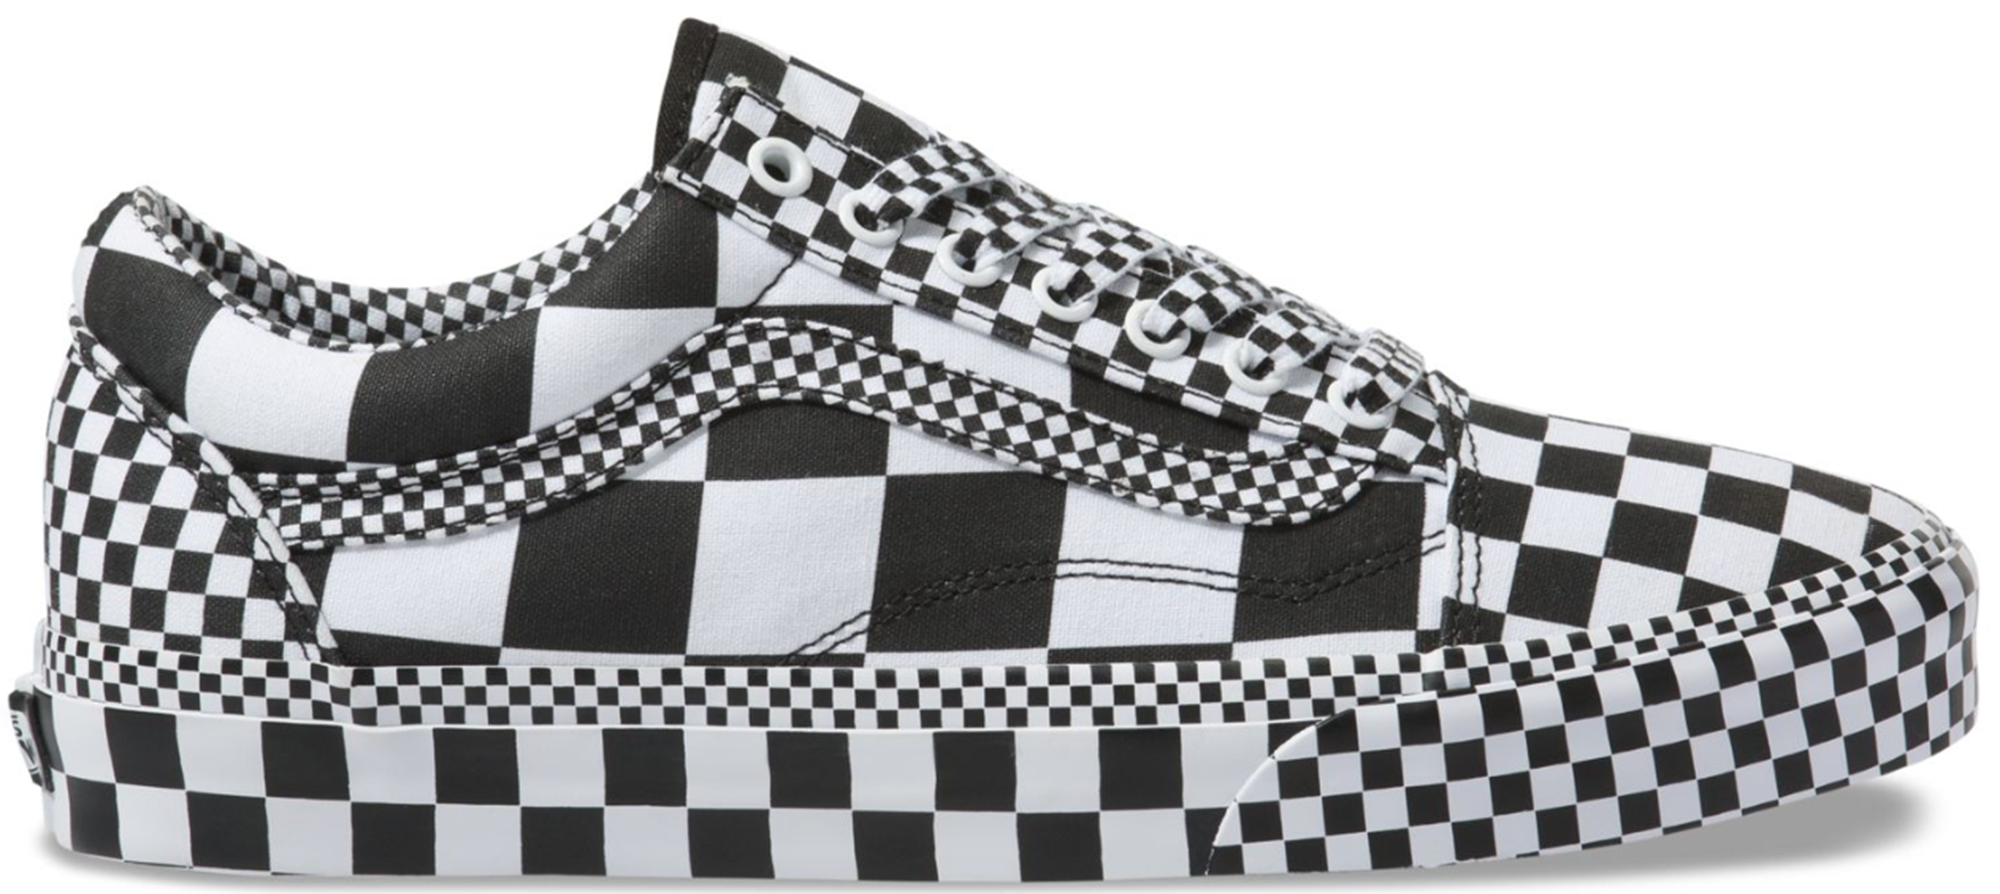 vans checkerboard on sale